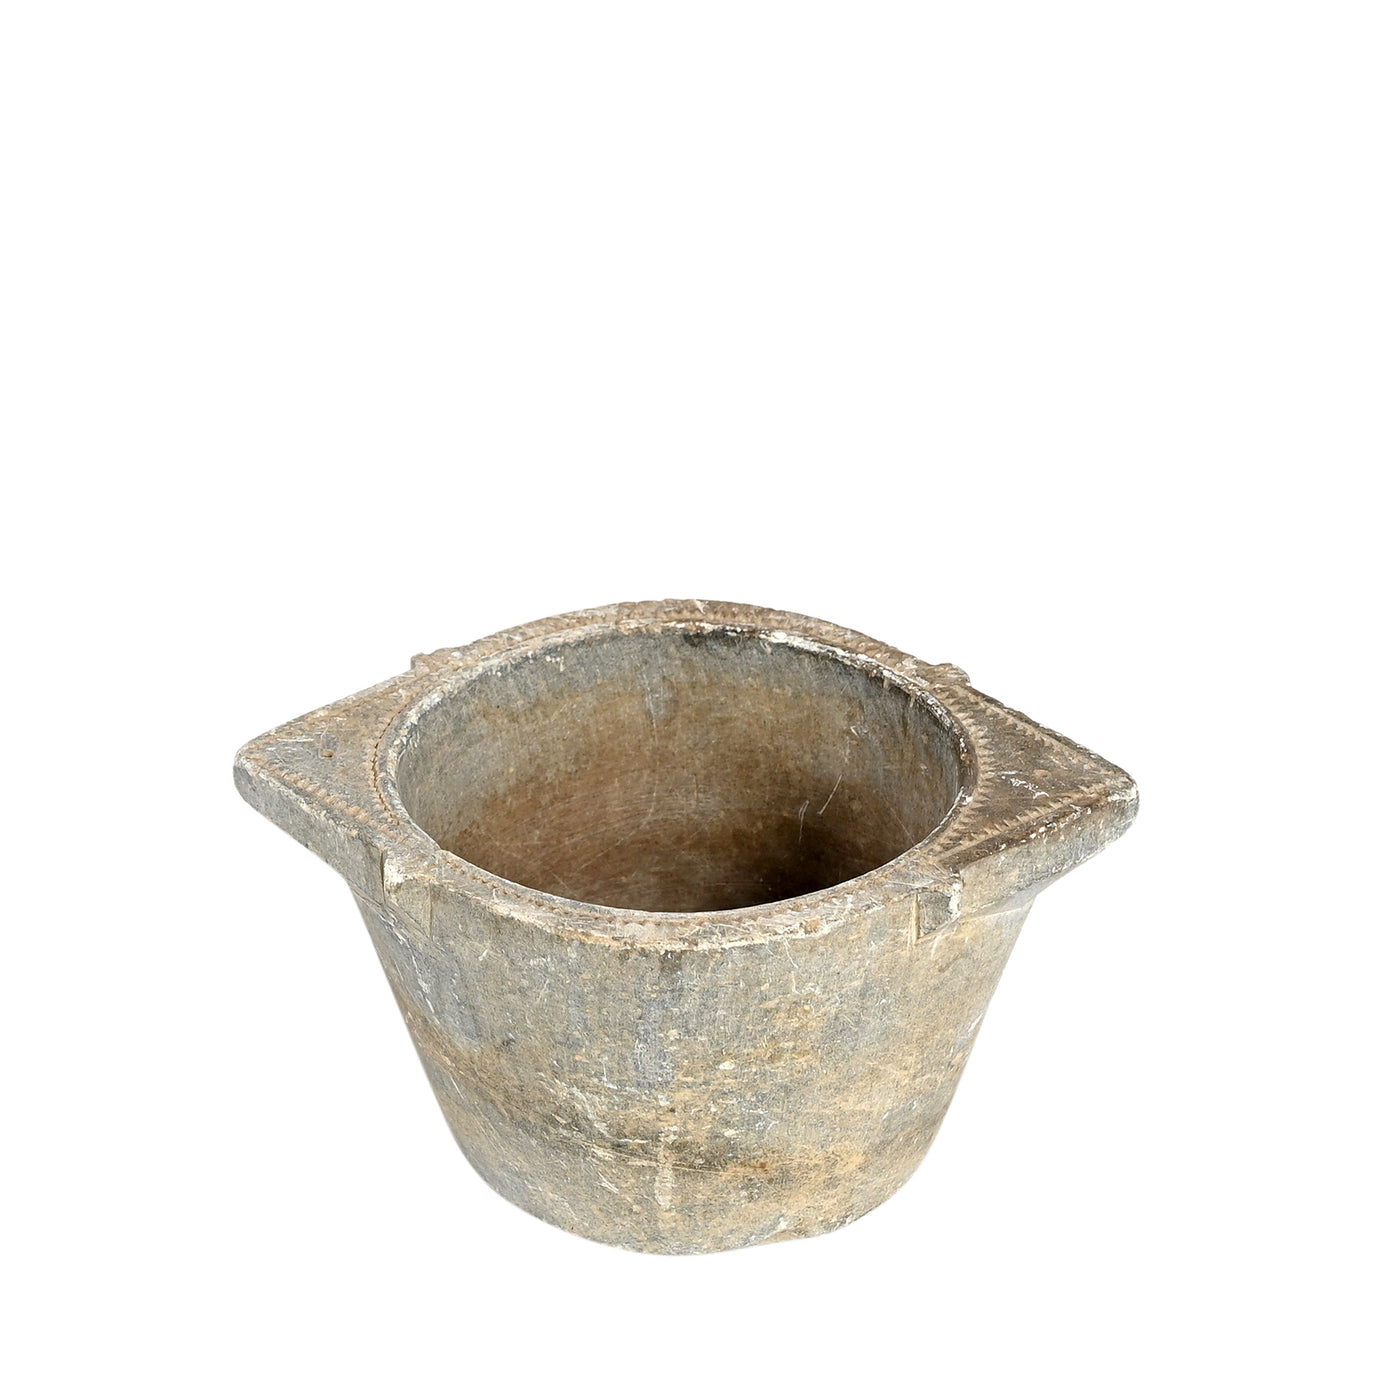 Kovaya - Stone bowl n ° 4